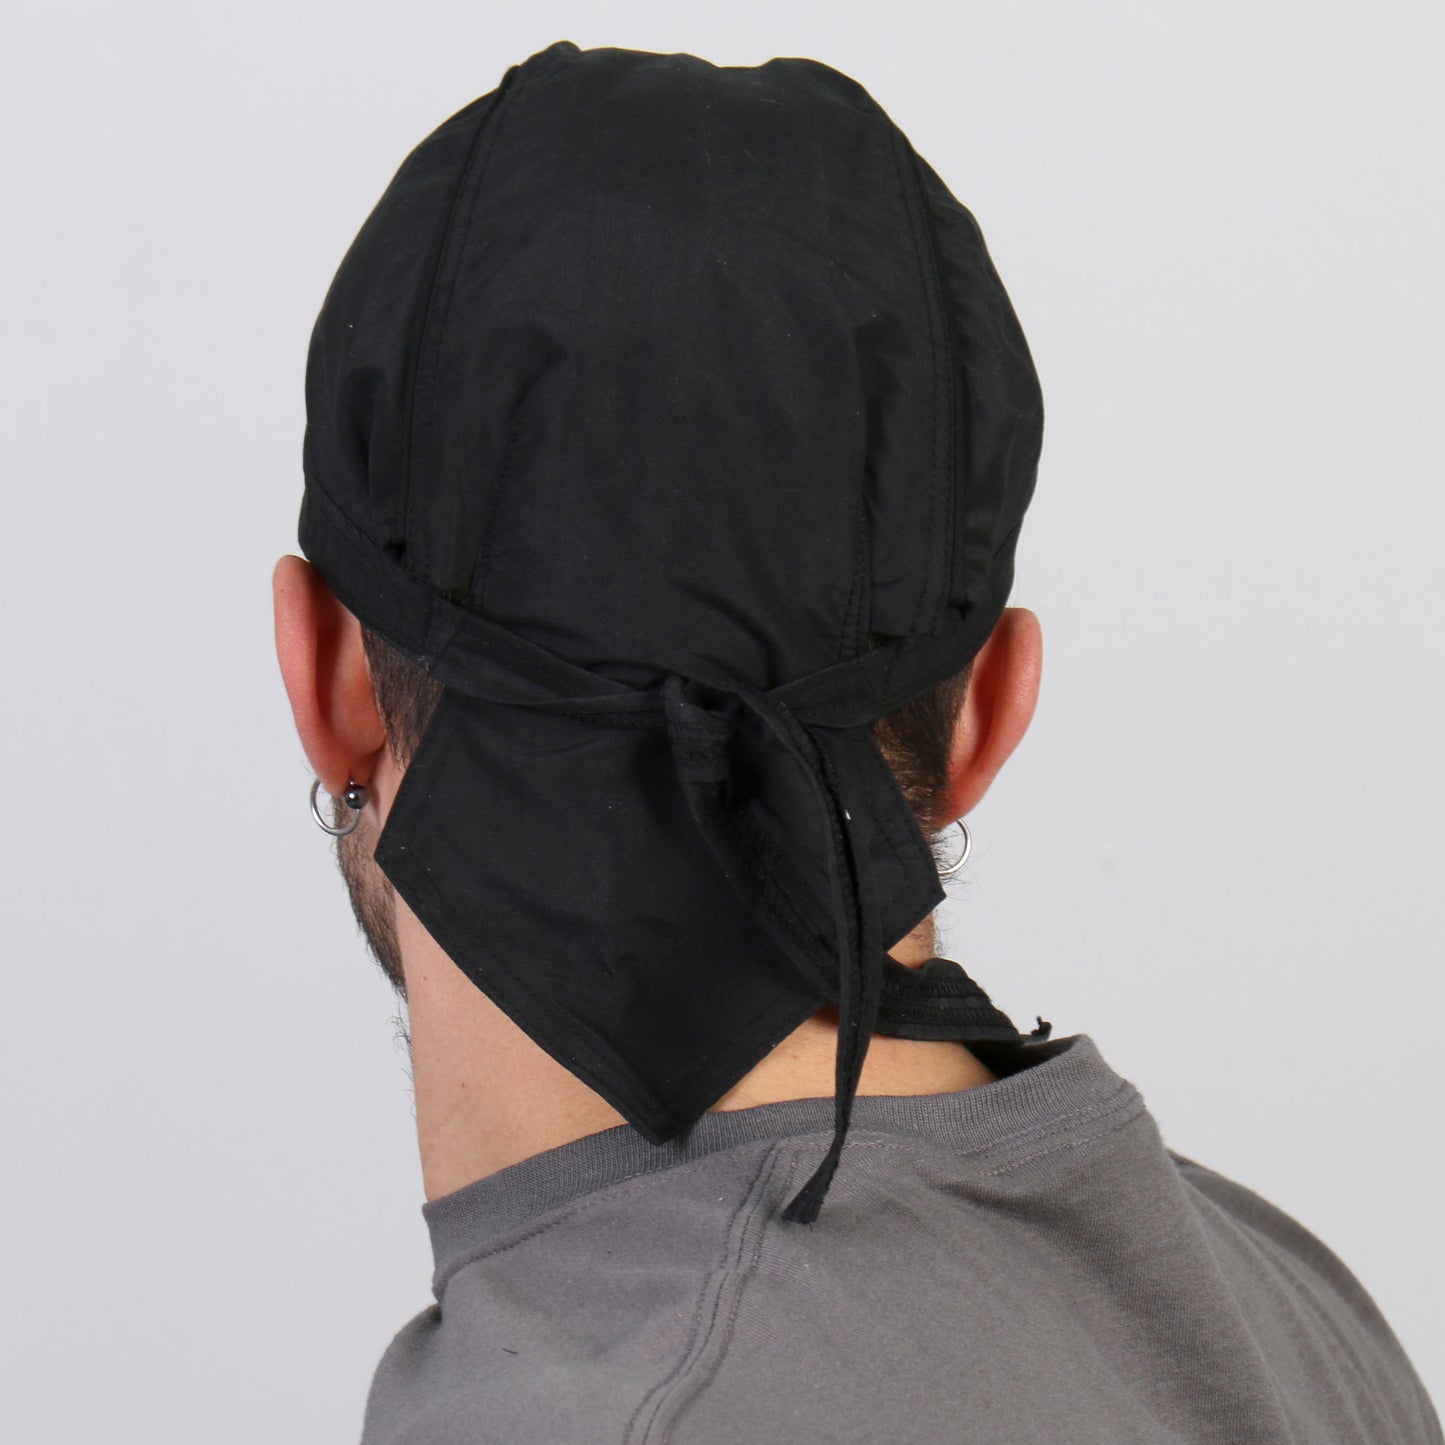 Hot Leathers HWH1064  Classic Black Premium Headwrap